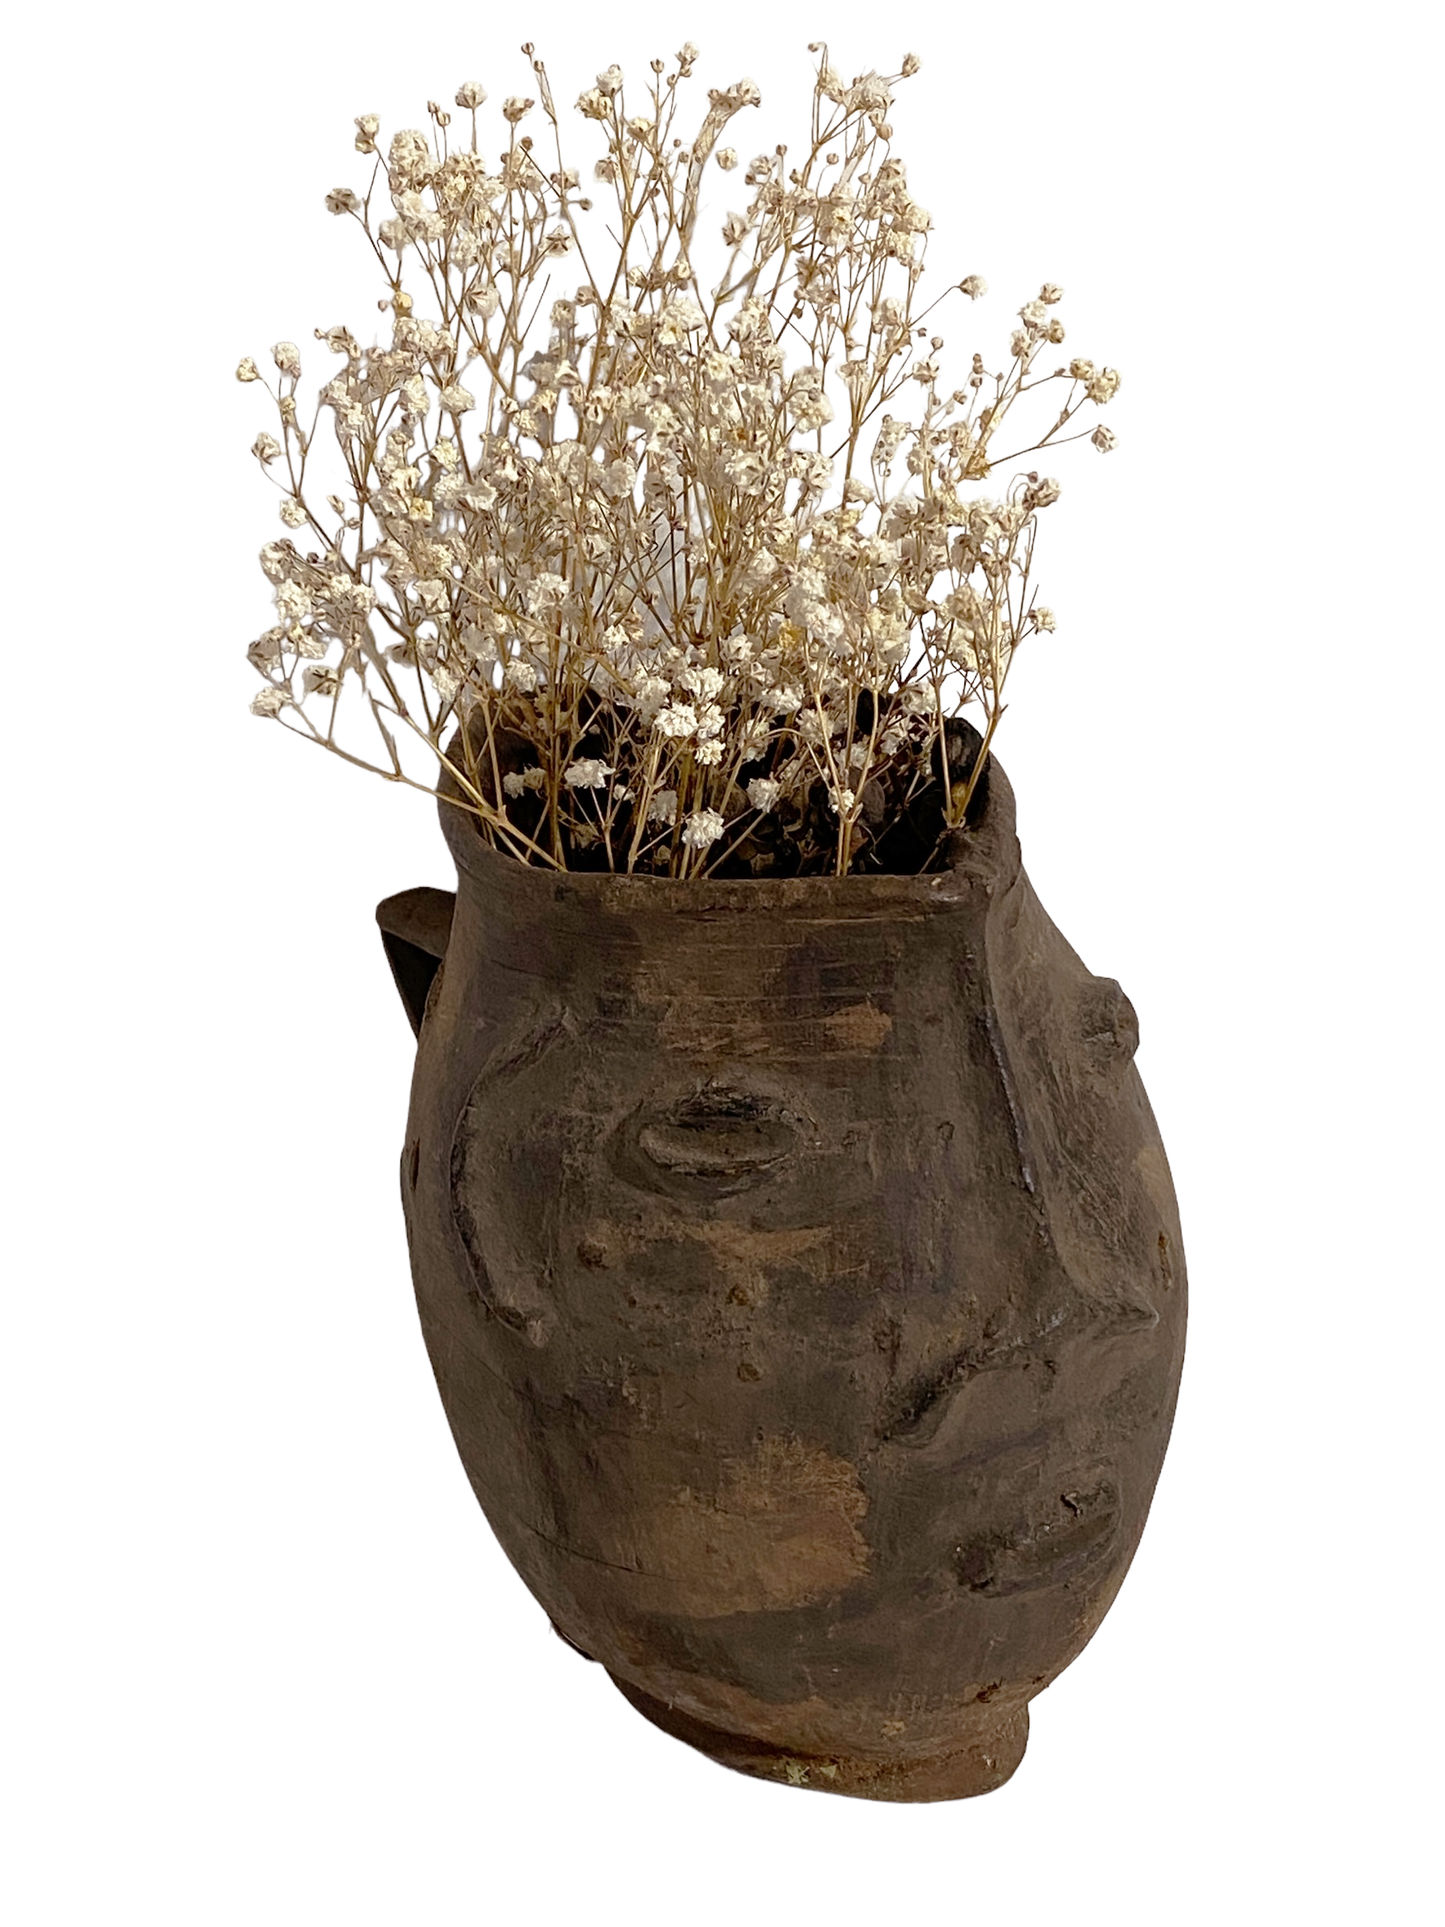 #5042 Kuba wooden Cup Figural Head Congo